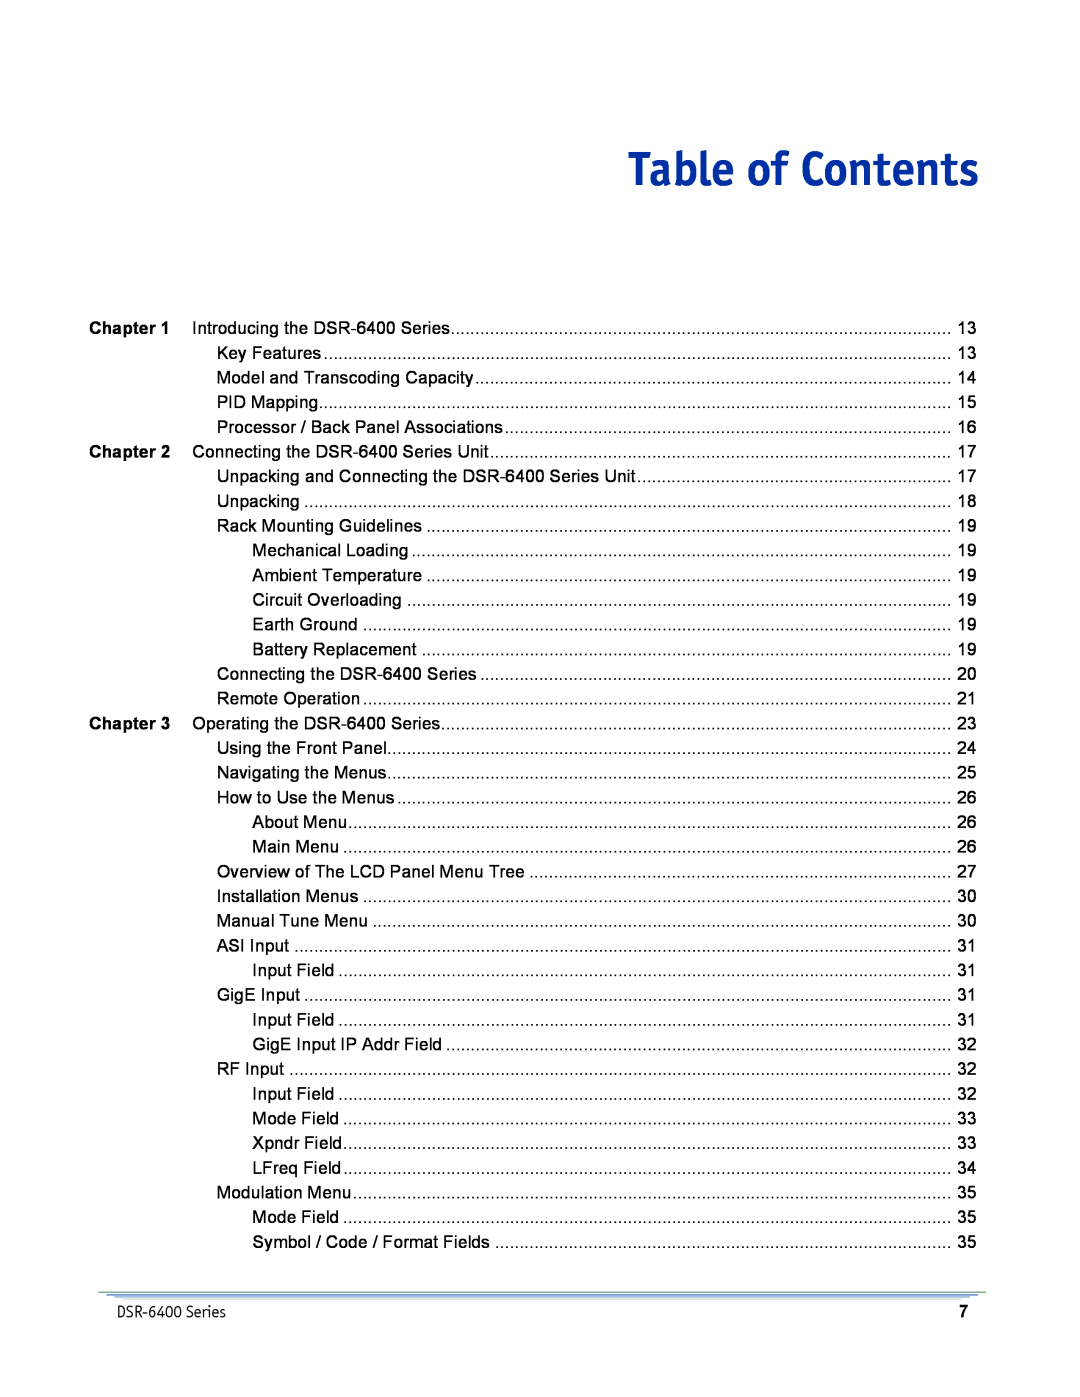 Motorola DSR-6400 manual Table of Contents 